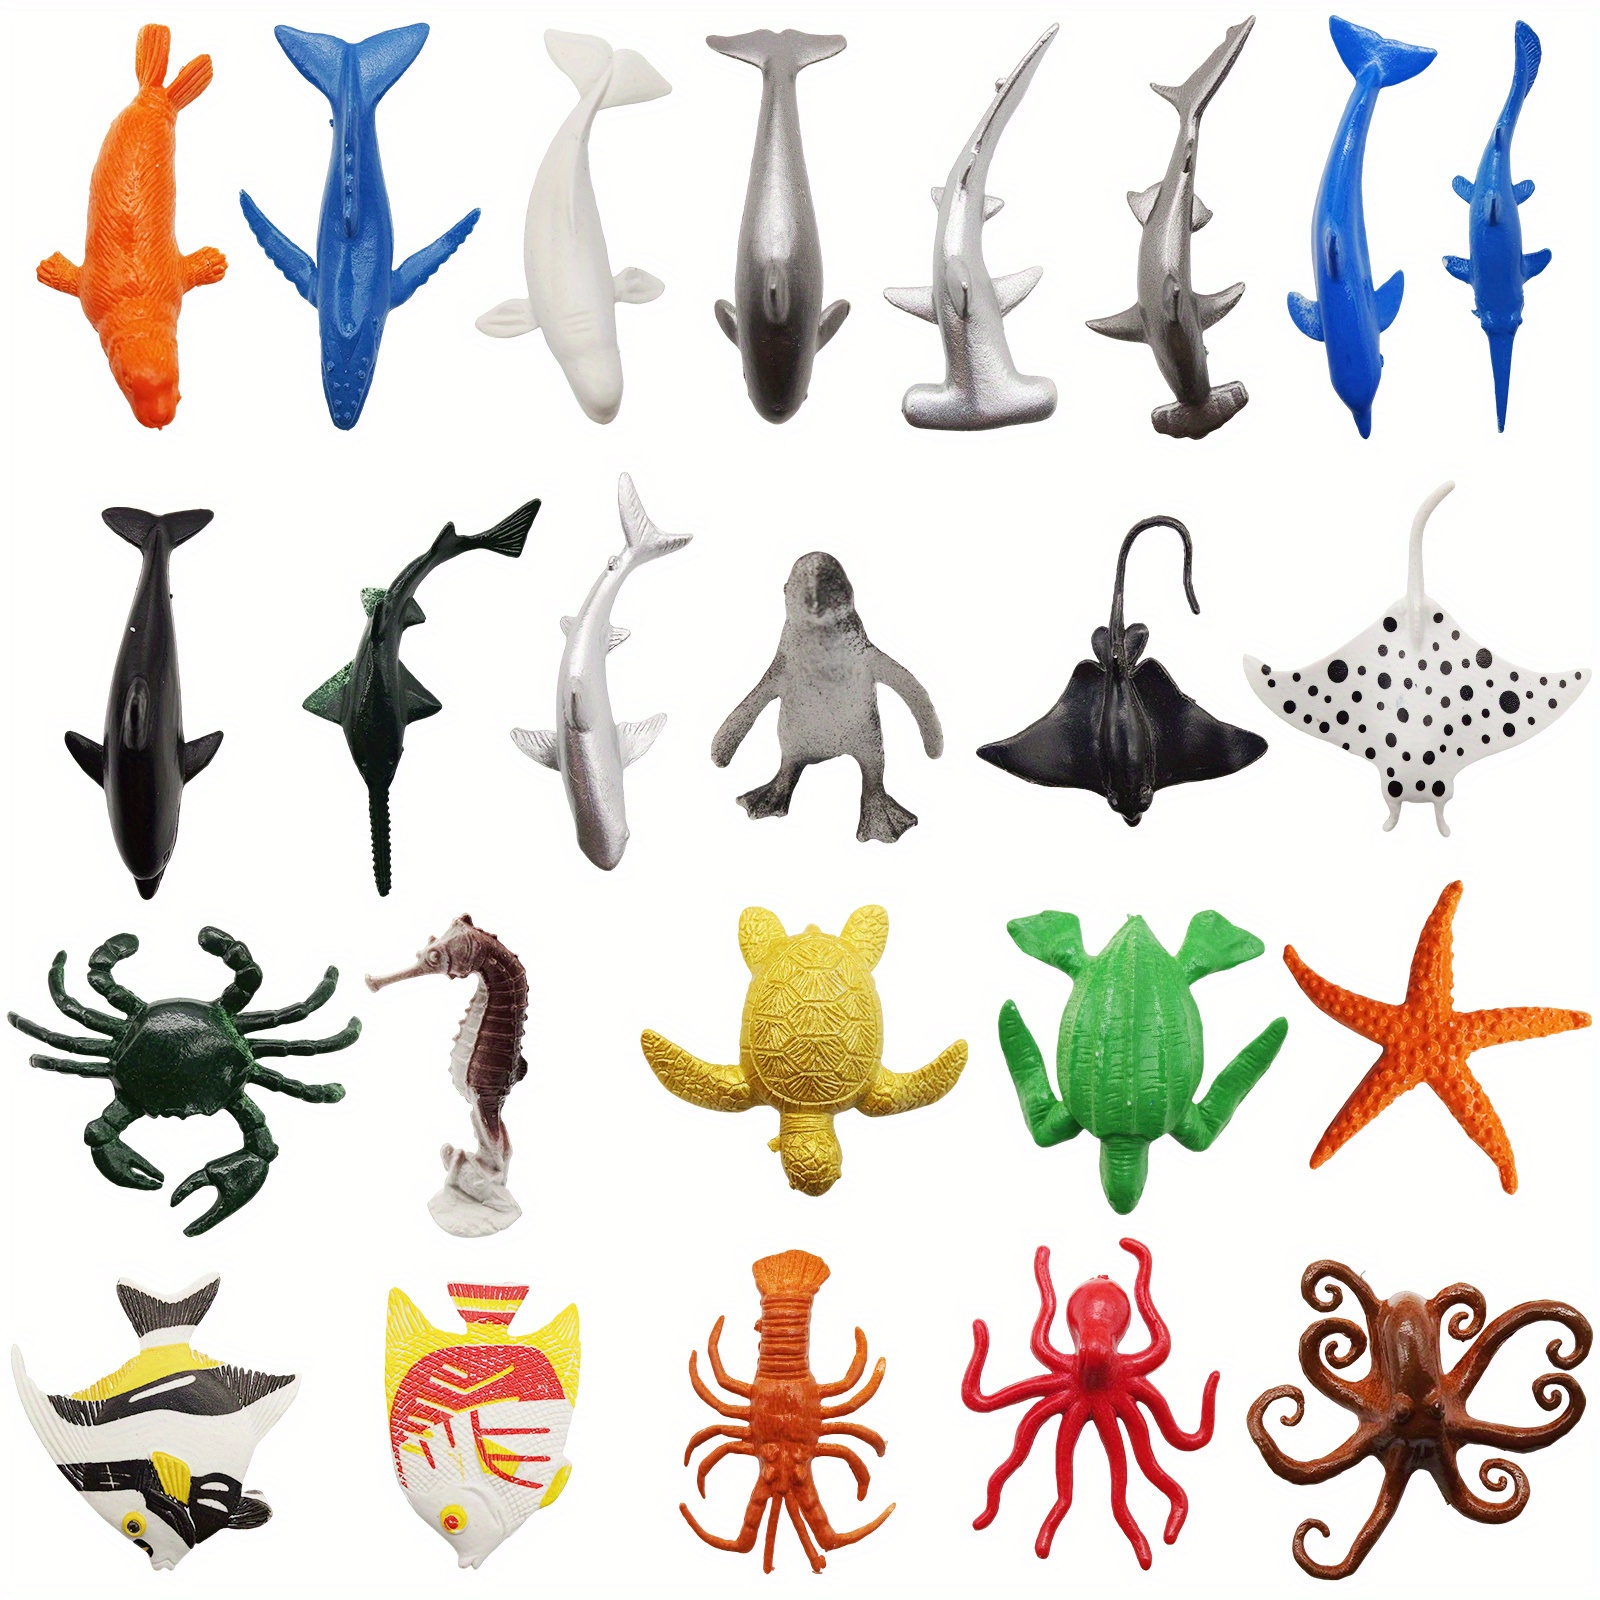 16 PCS Ocean Sea Animal Figures,Mini Sea Life Creatures Toys